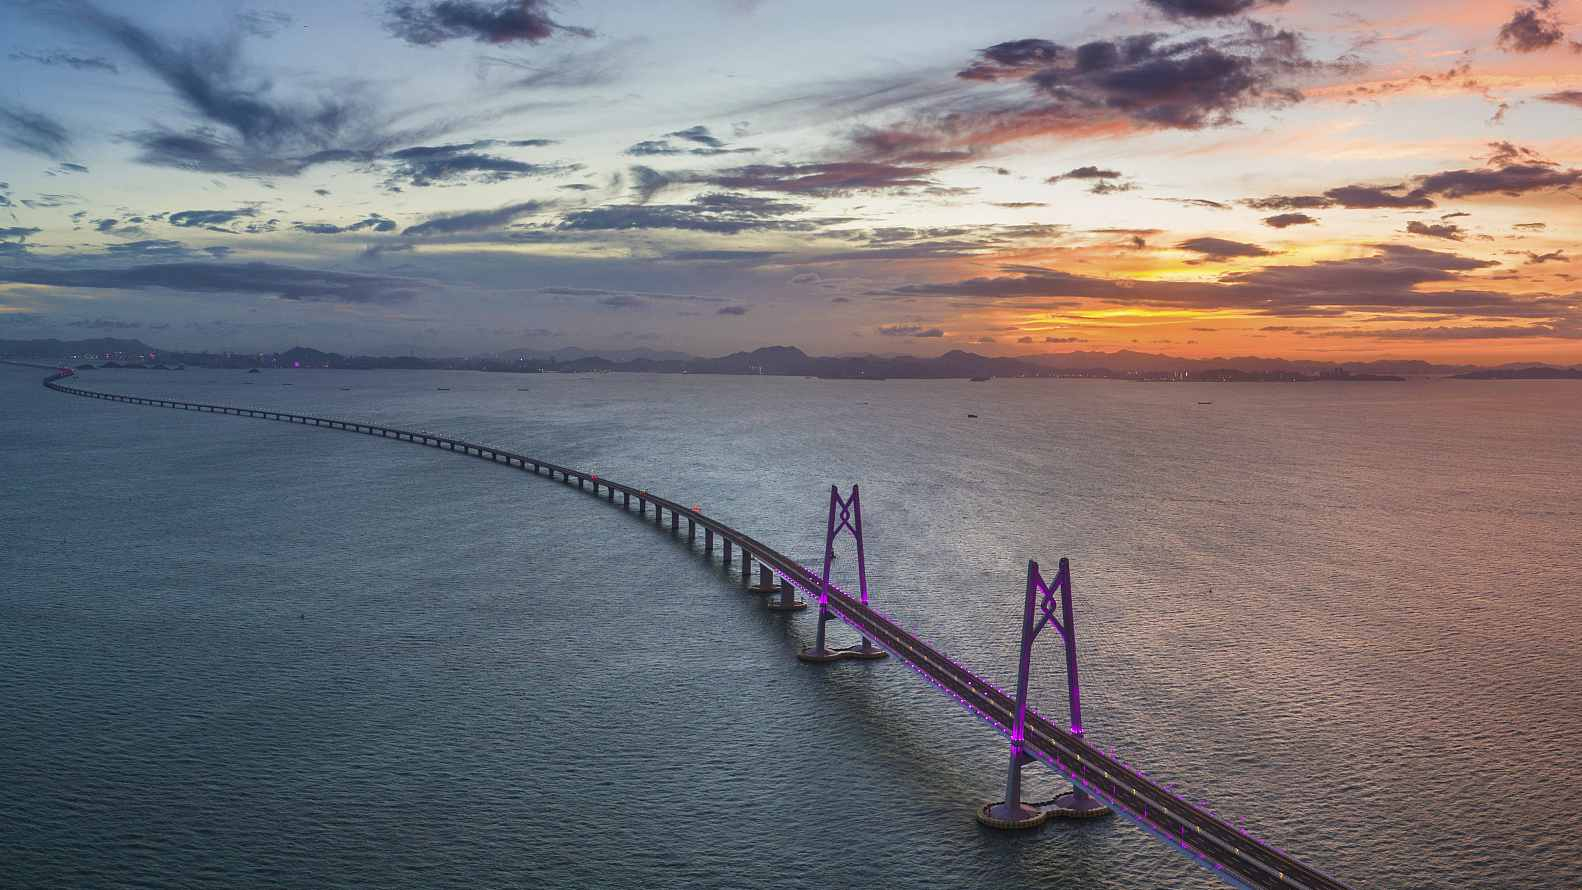 Hong Kong-Zhuhai-Macao Bridge (HZMB)